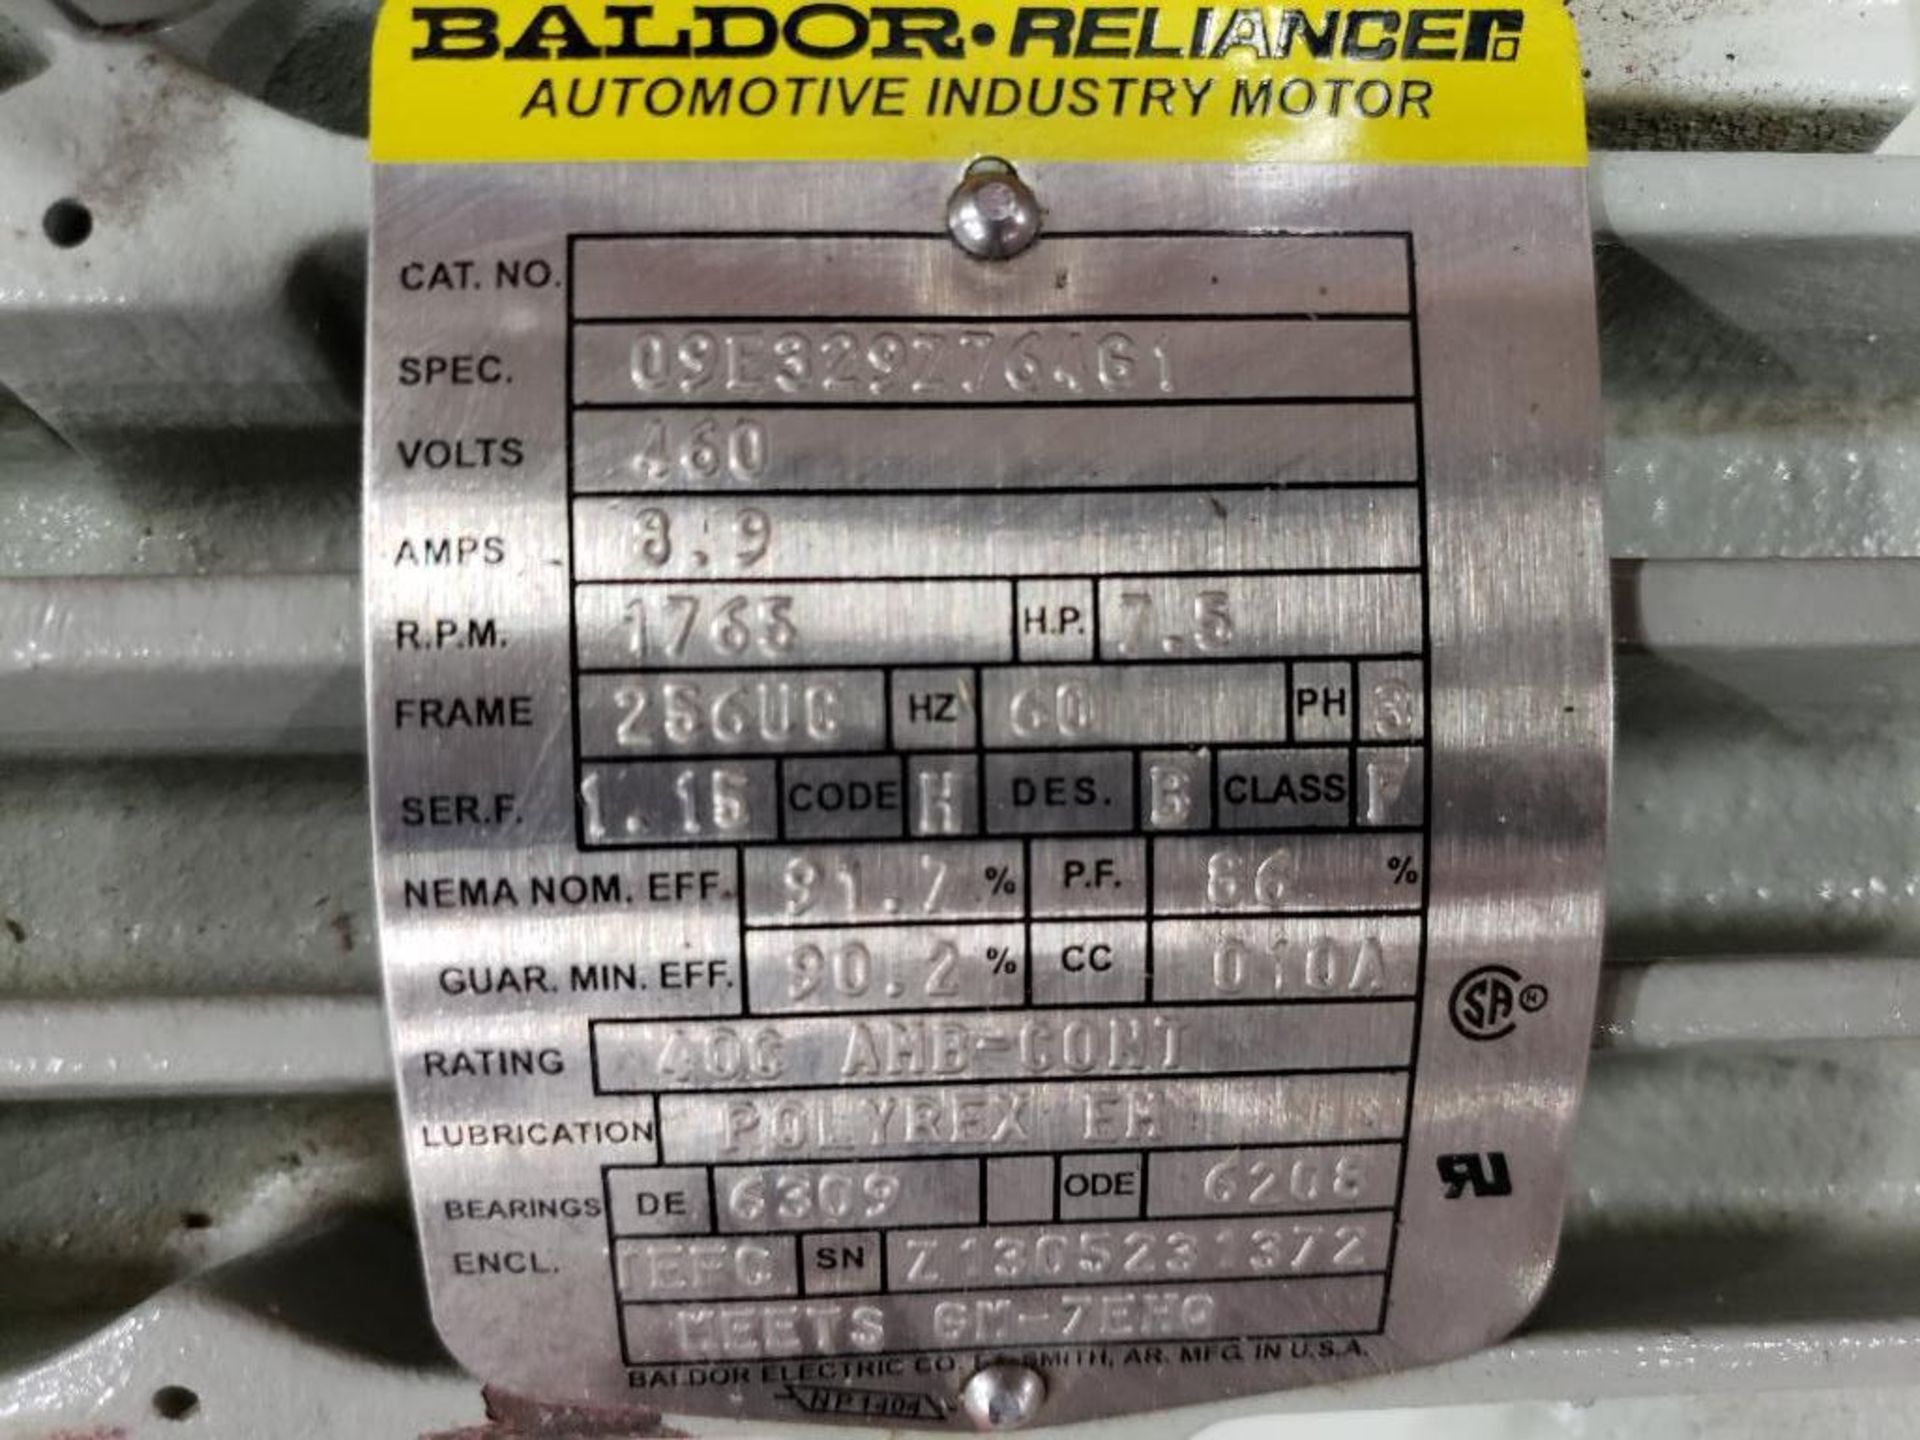 7.5HP Baldor Reliance automotive industry motor 09E329Z764G1. 3PH, 460V, 1765RPM, 256UC-Frame. - Image 3 of 6